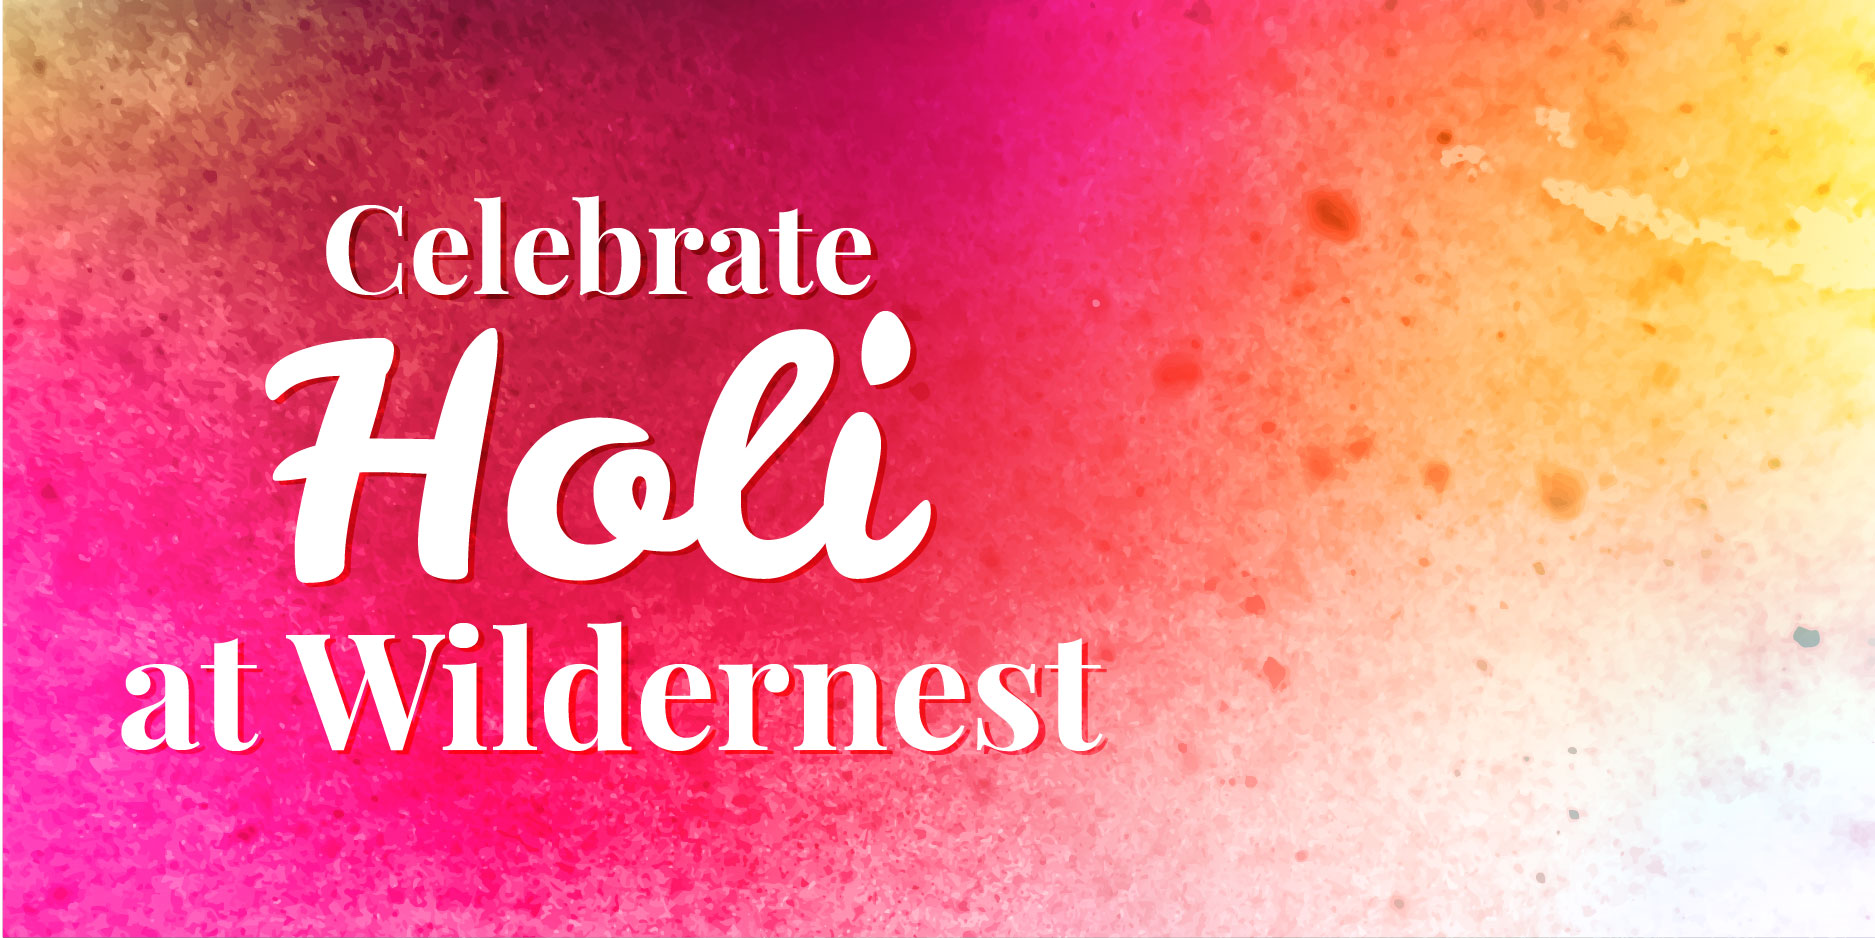 Celebrate Holi at wildernest